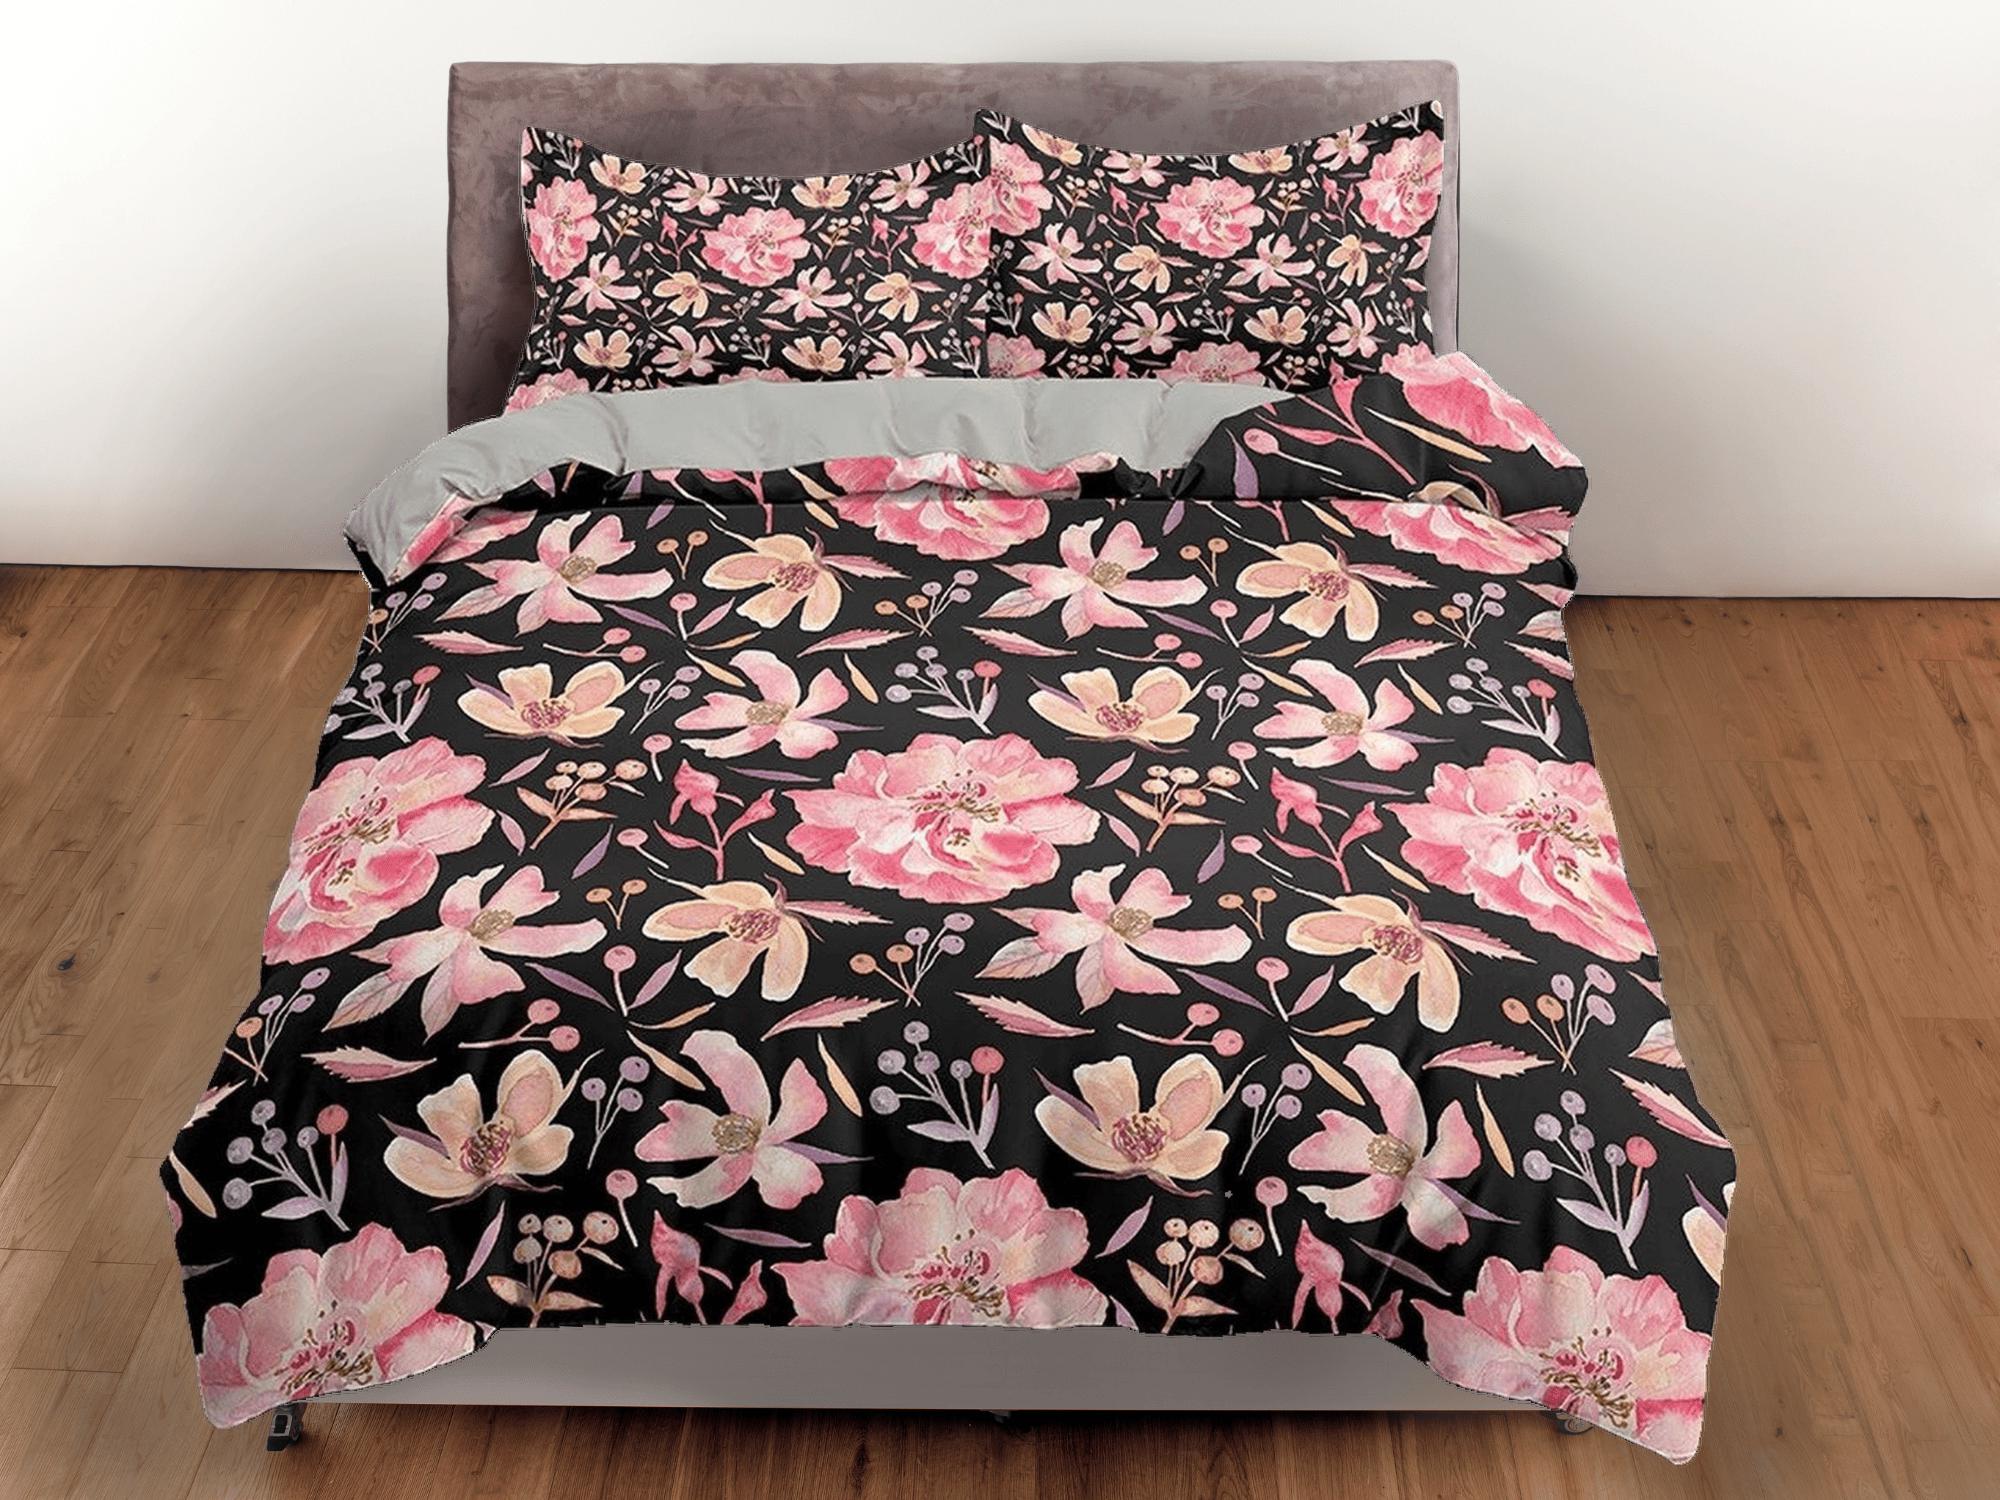 daintyduvet Pink floral retro duvet cover colorful bedding, teen girl bedroom, baby girl crib bedding boho maximalist bedspread aesthetic bedding